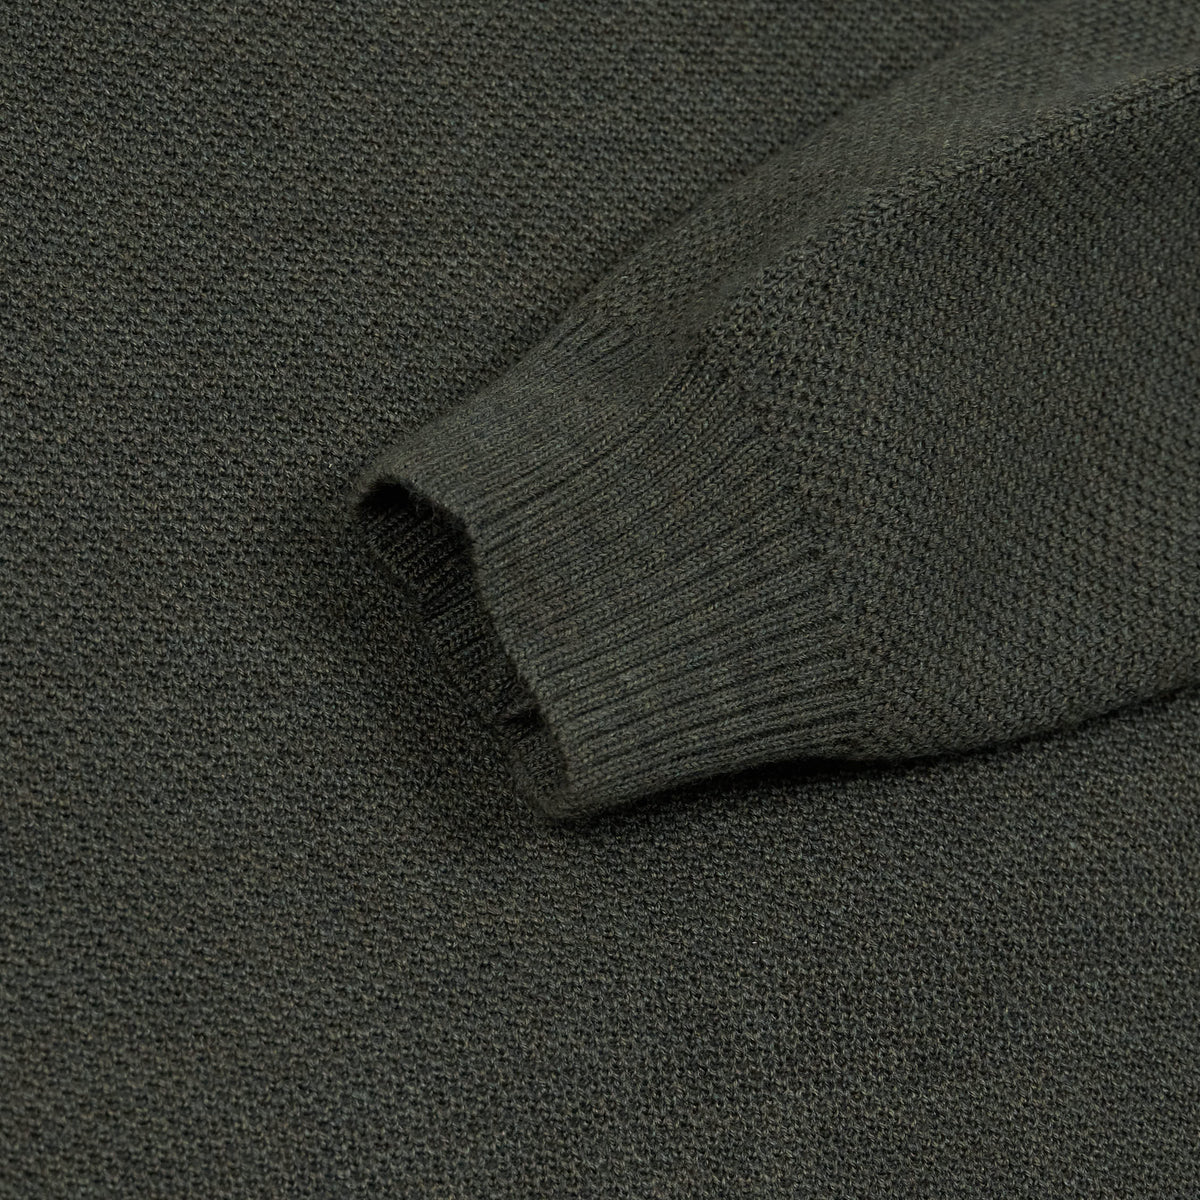 Nitto Knitwear Half Zip Piqué-Knit Merino Troyer